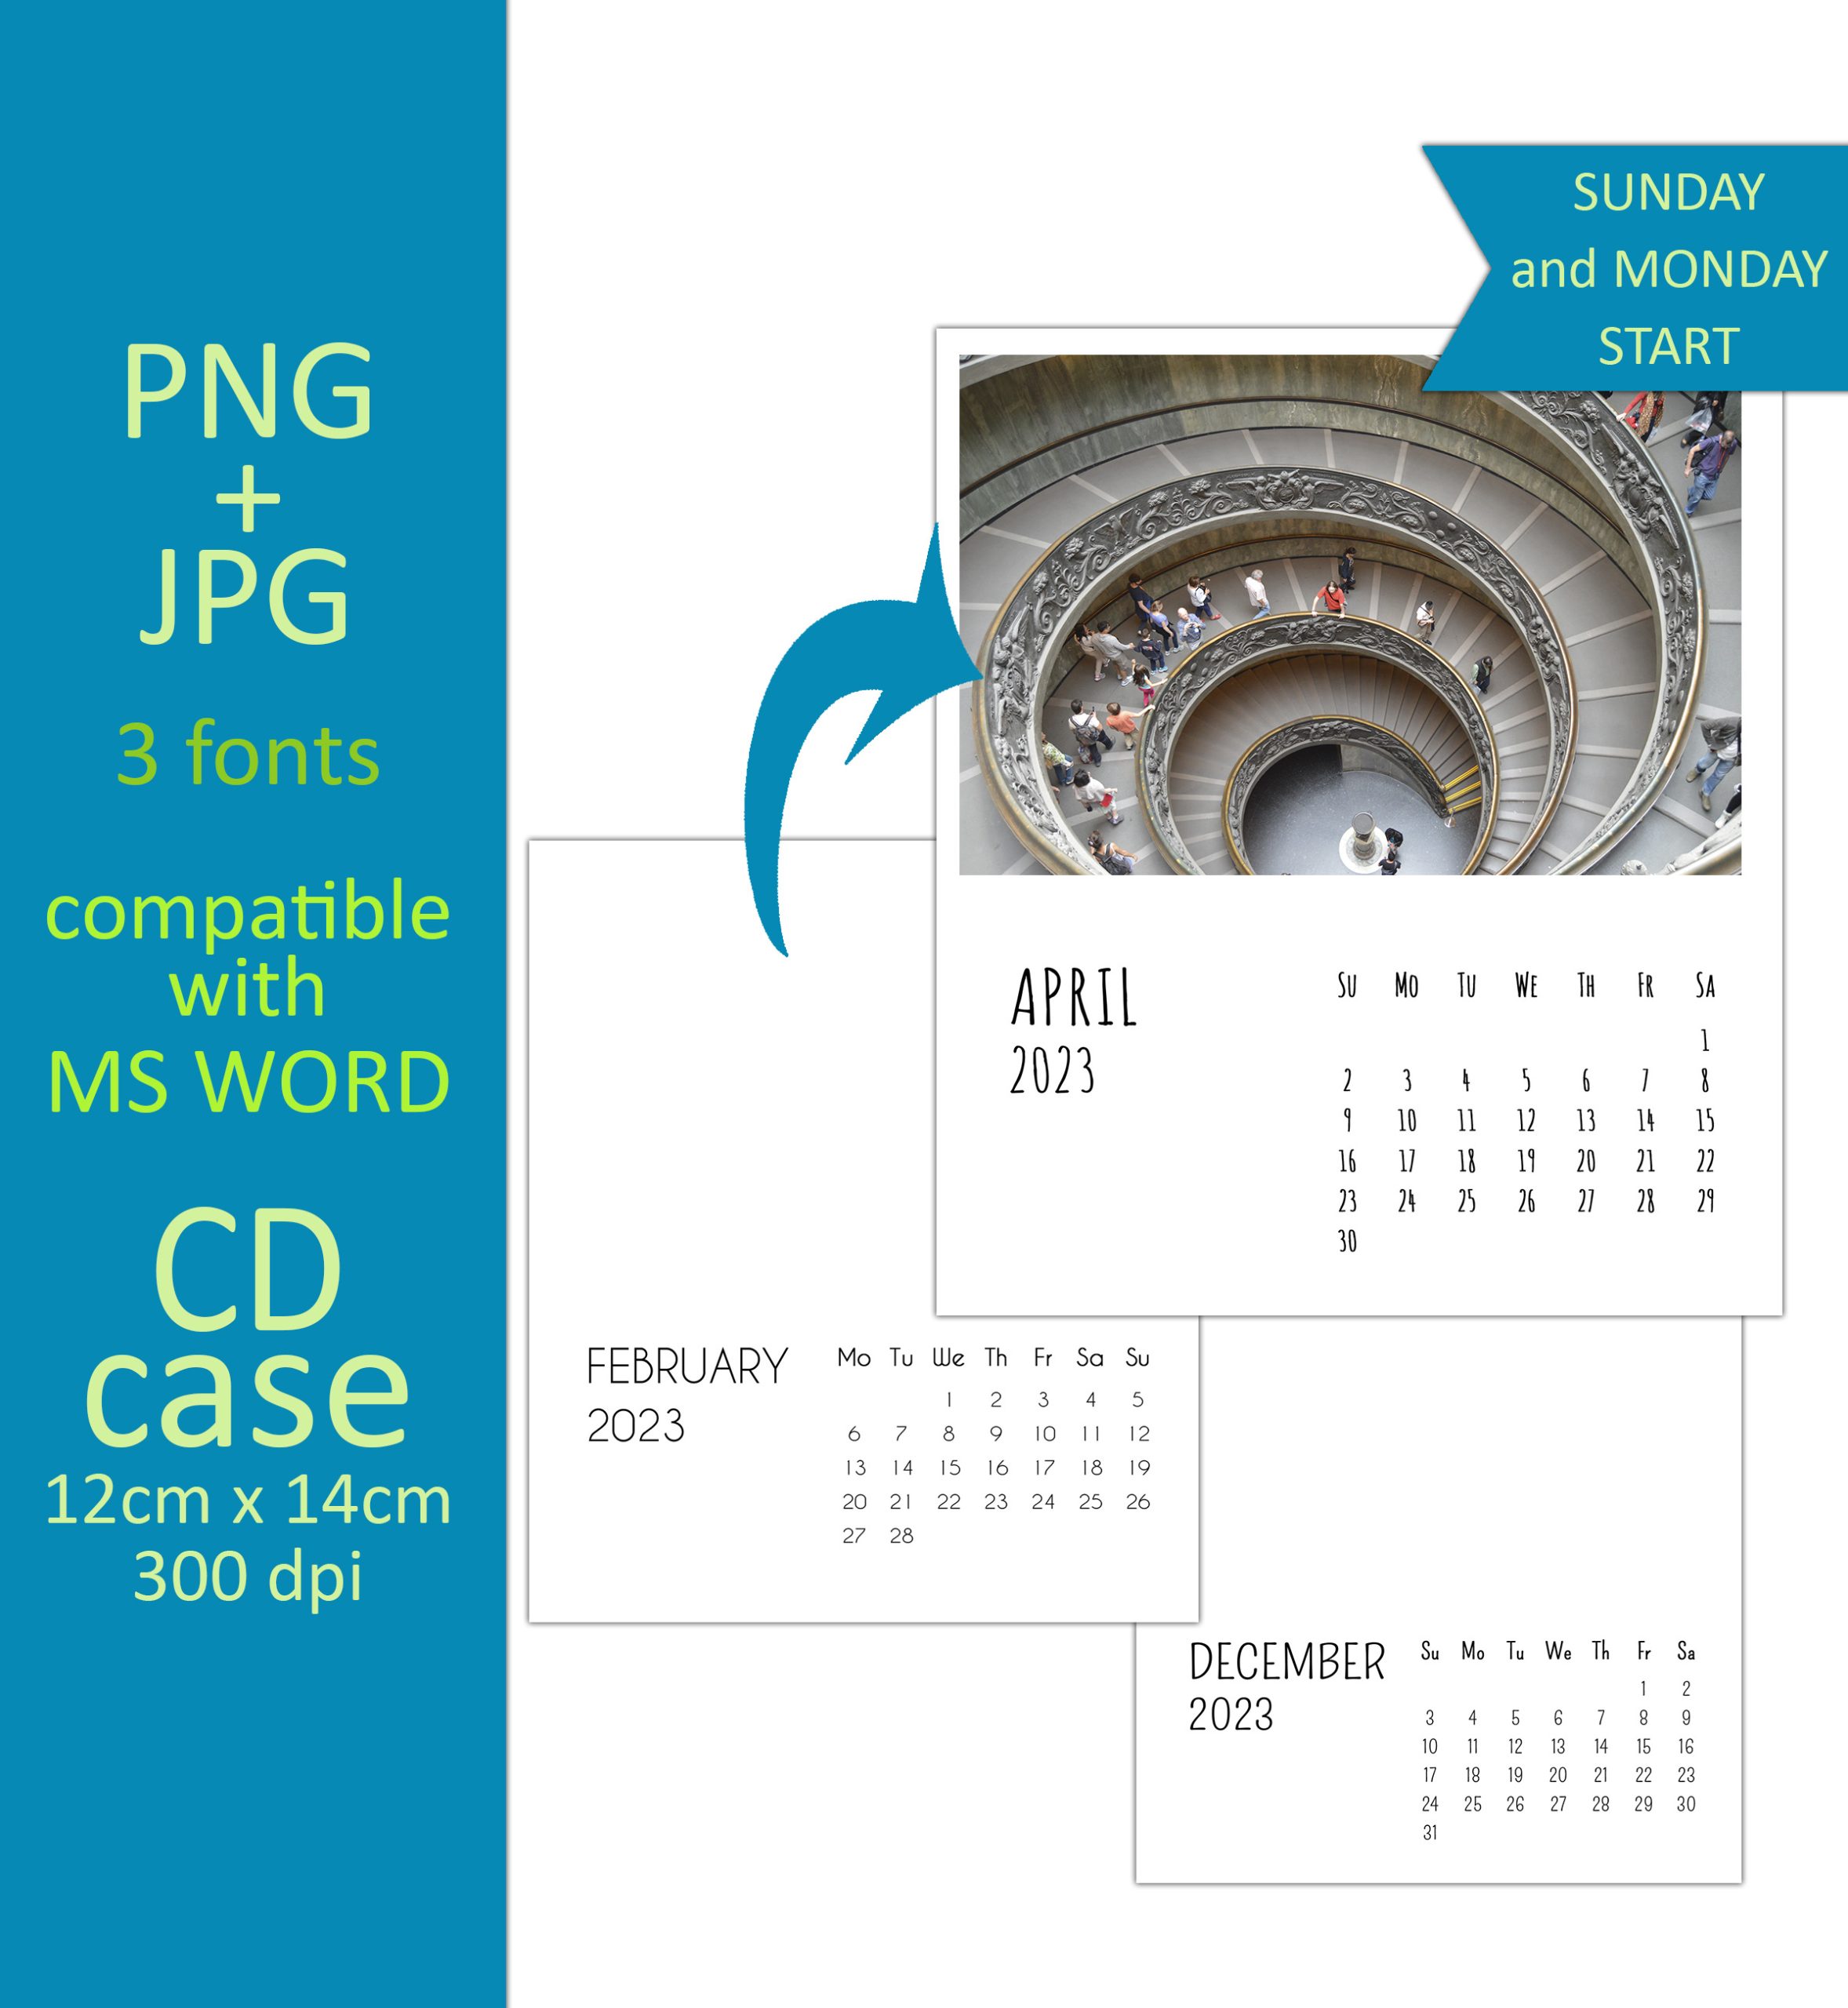 CD case 2023 calendar template